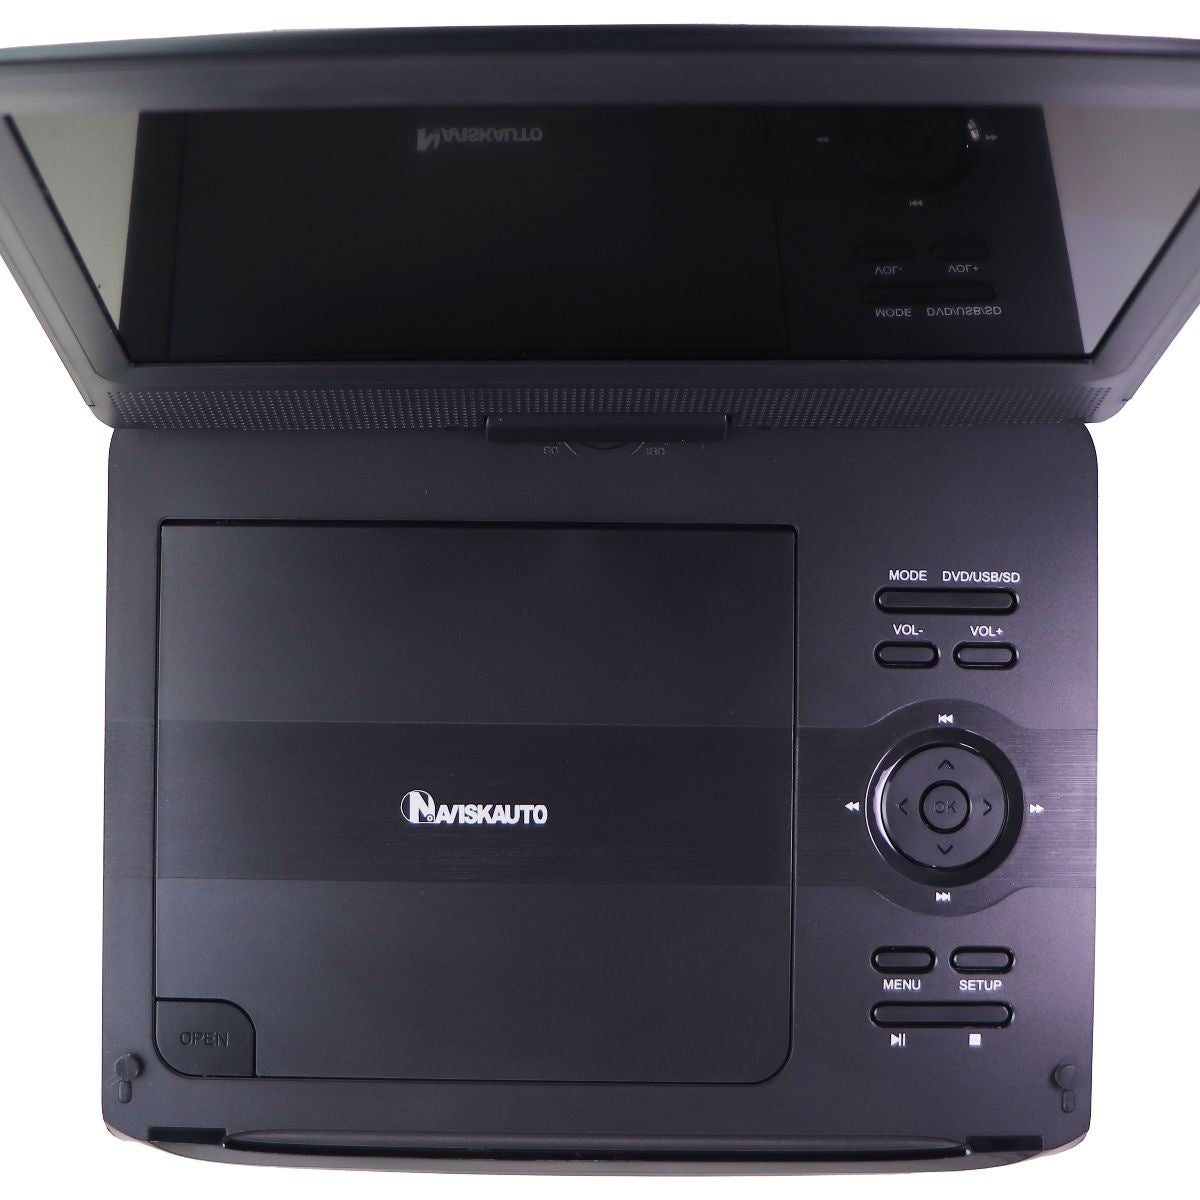 Naviskauto Portable (10.1-inch) DVD Player - Black (PS1028B) – Simple